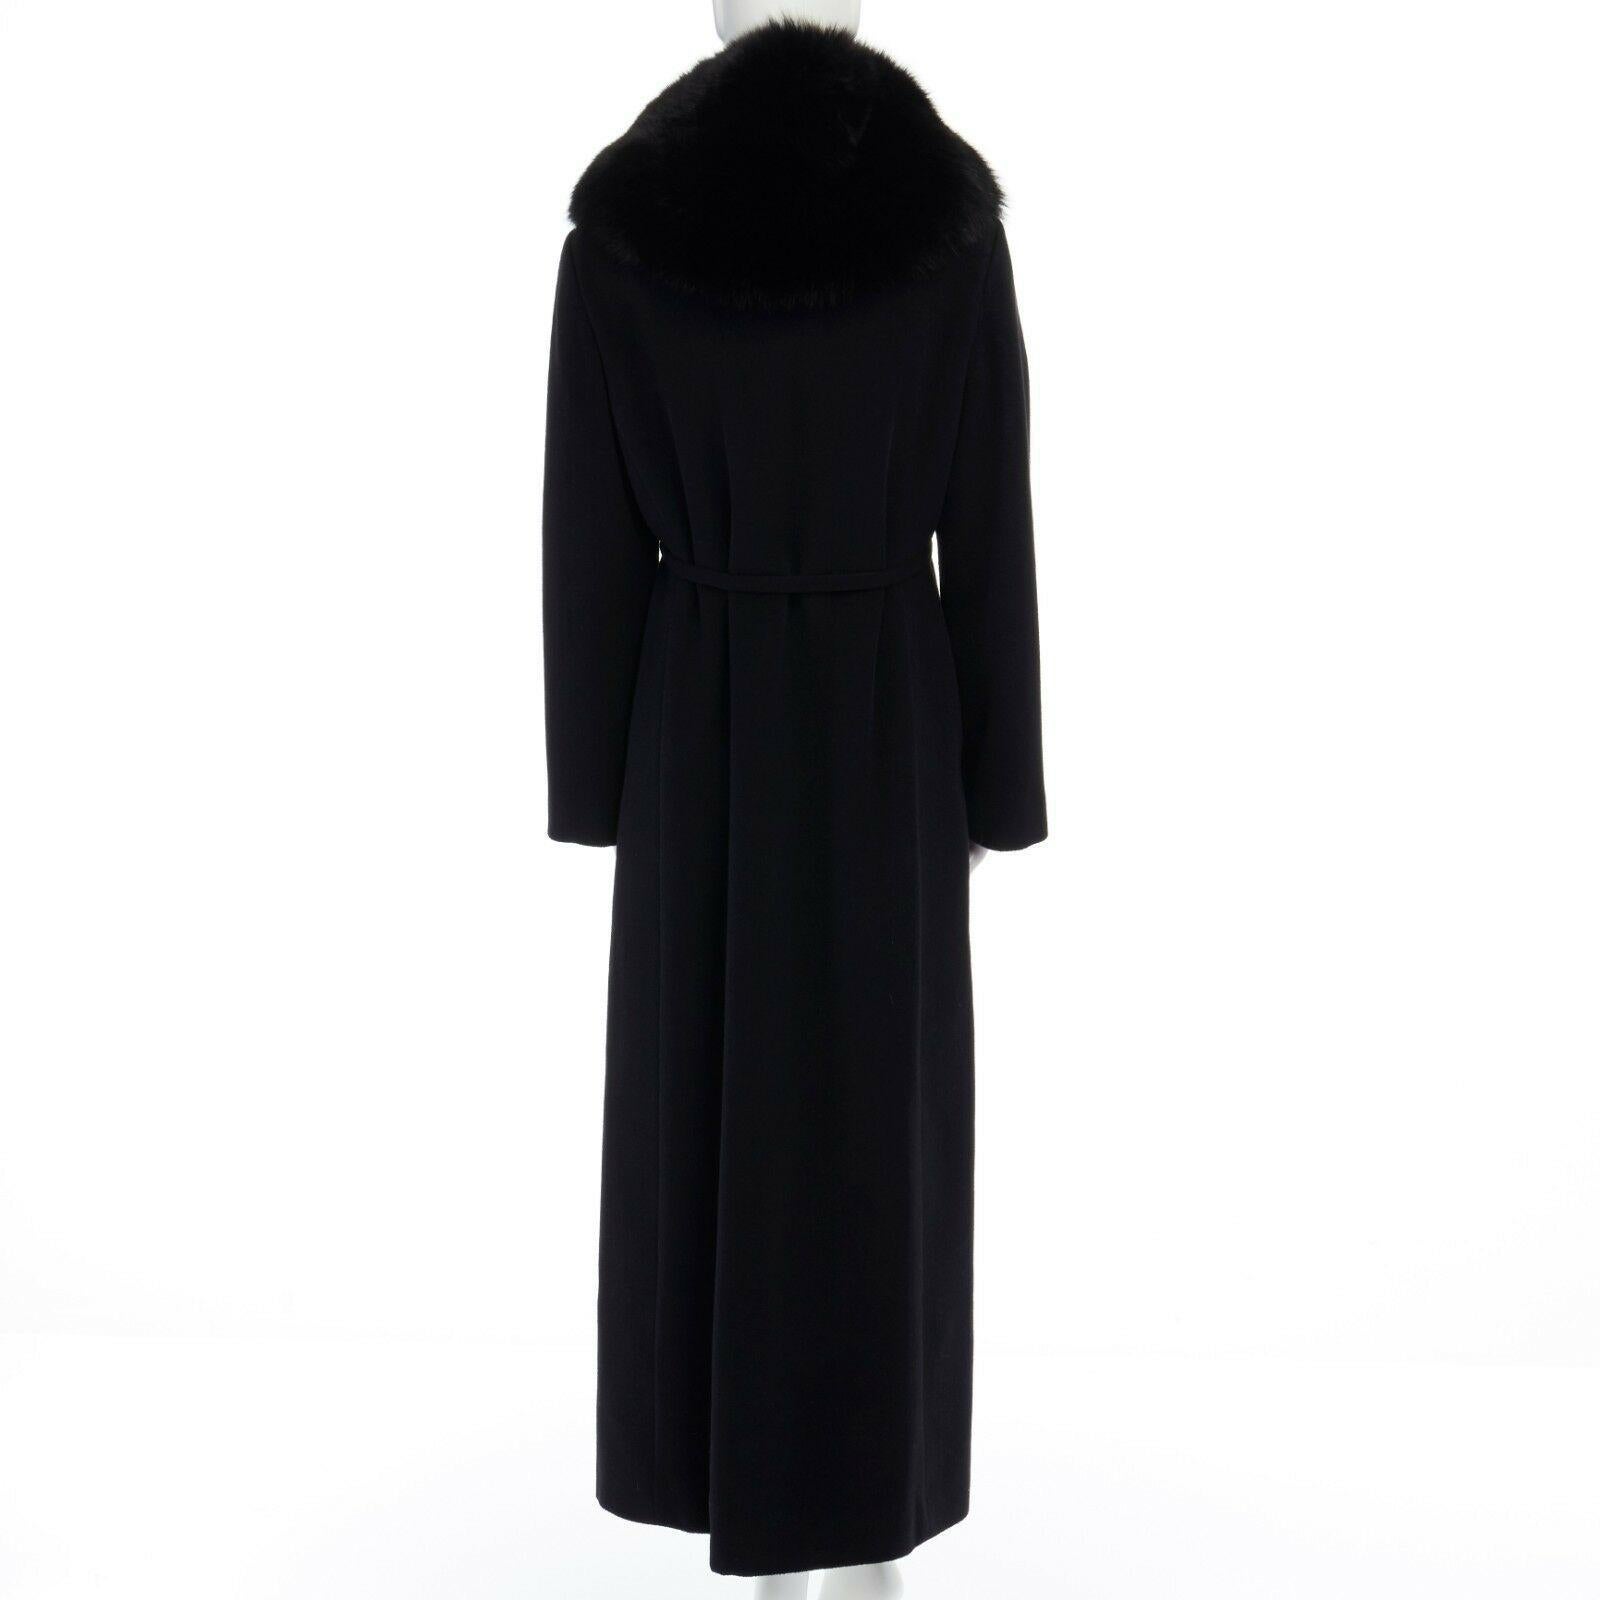 GIANNI VERSACE 1998 black angora wool cashmere oversized fur collar coat IT42 M 2